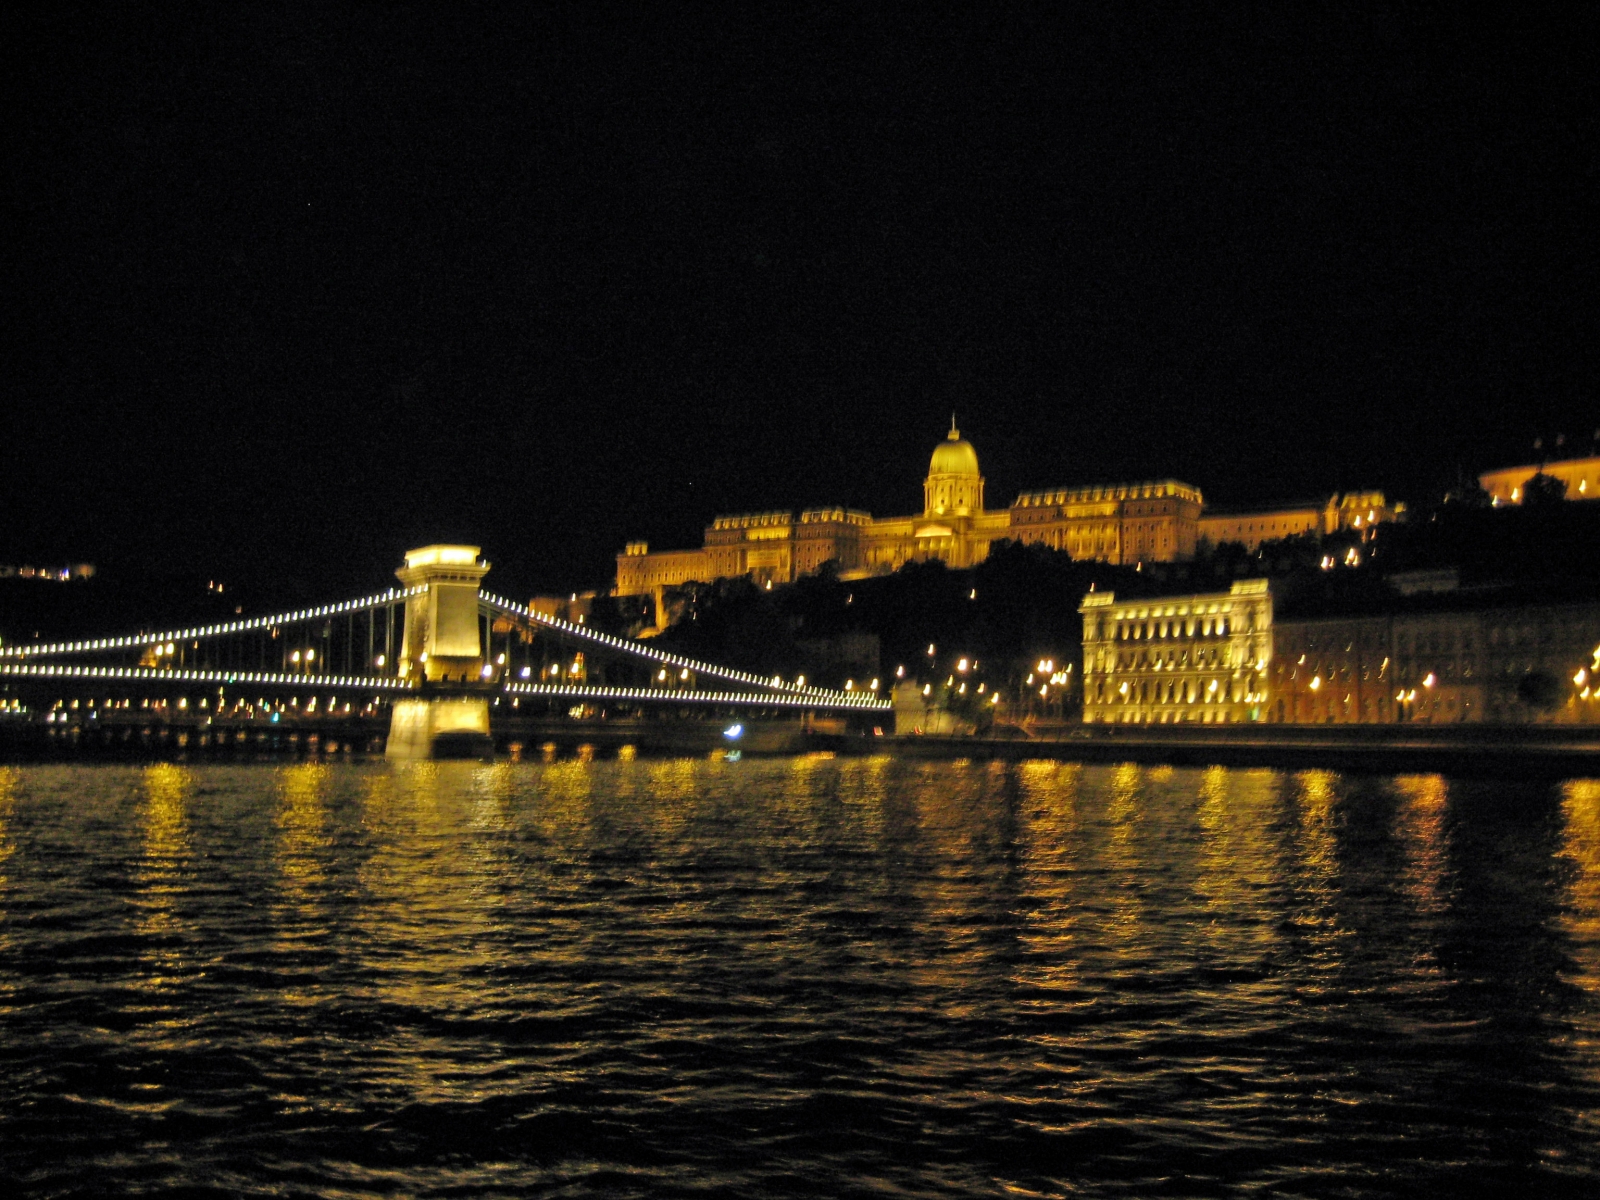 Chain Bridge and Royal Palace at night, Budapest, Hungary